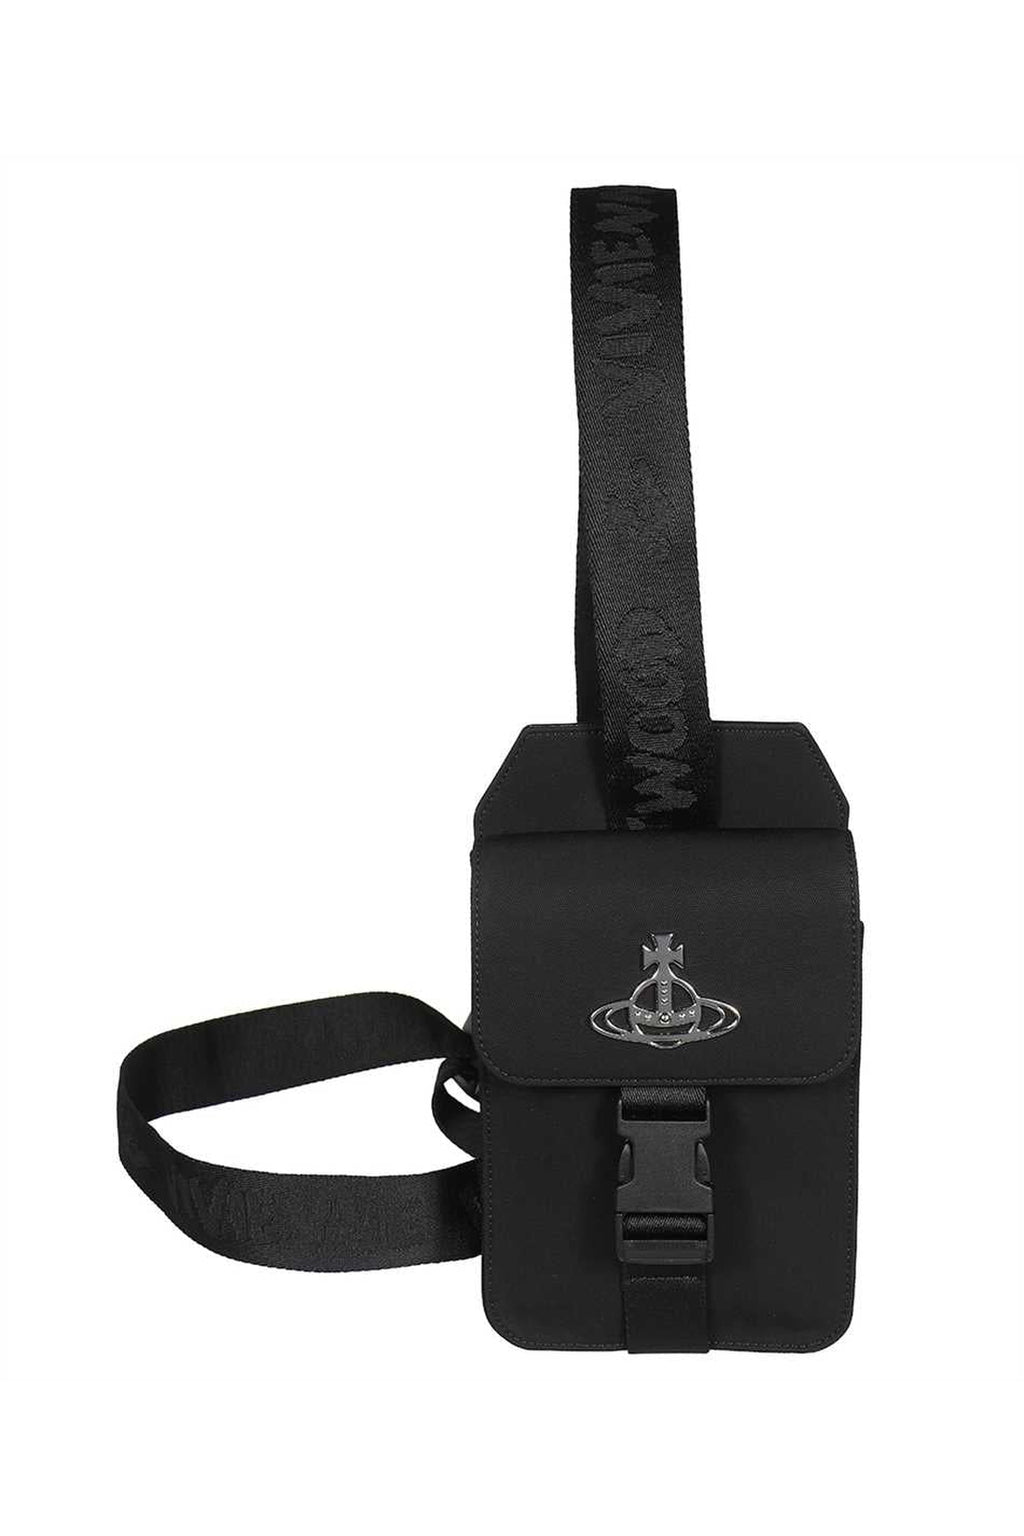 Vivienne Westwood-OUTLET-SALE-Messenger bag with logo-ARCHIVIST